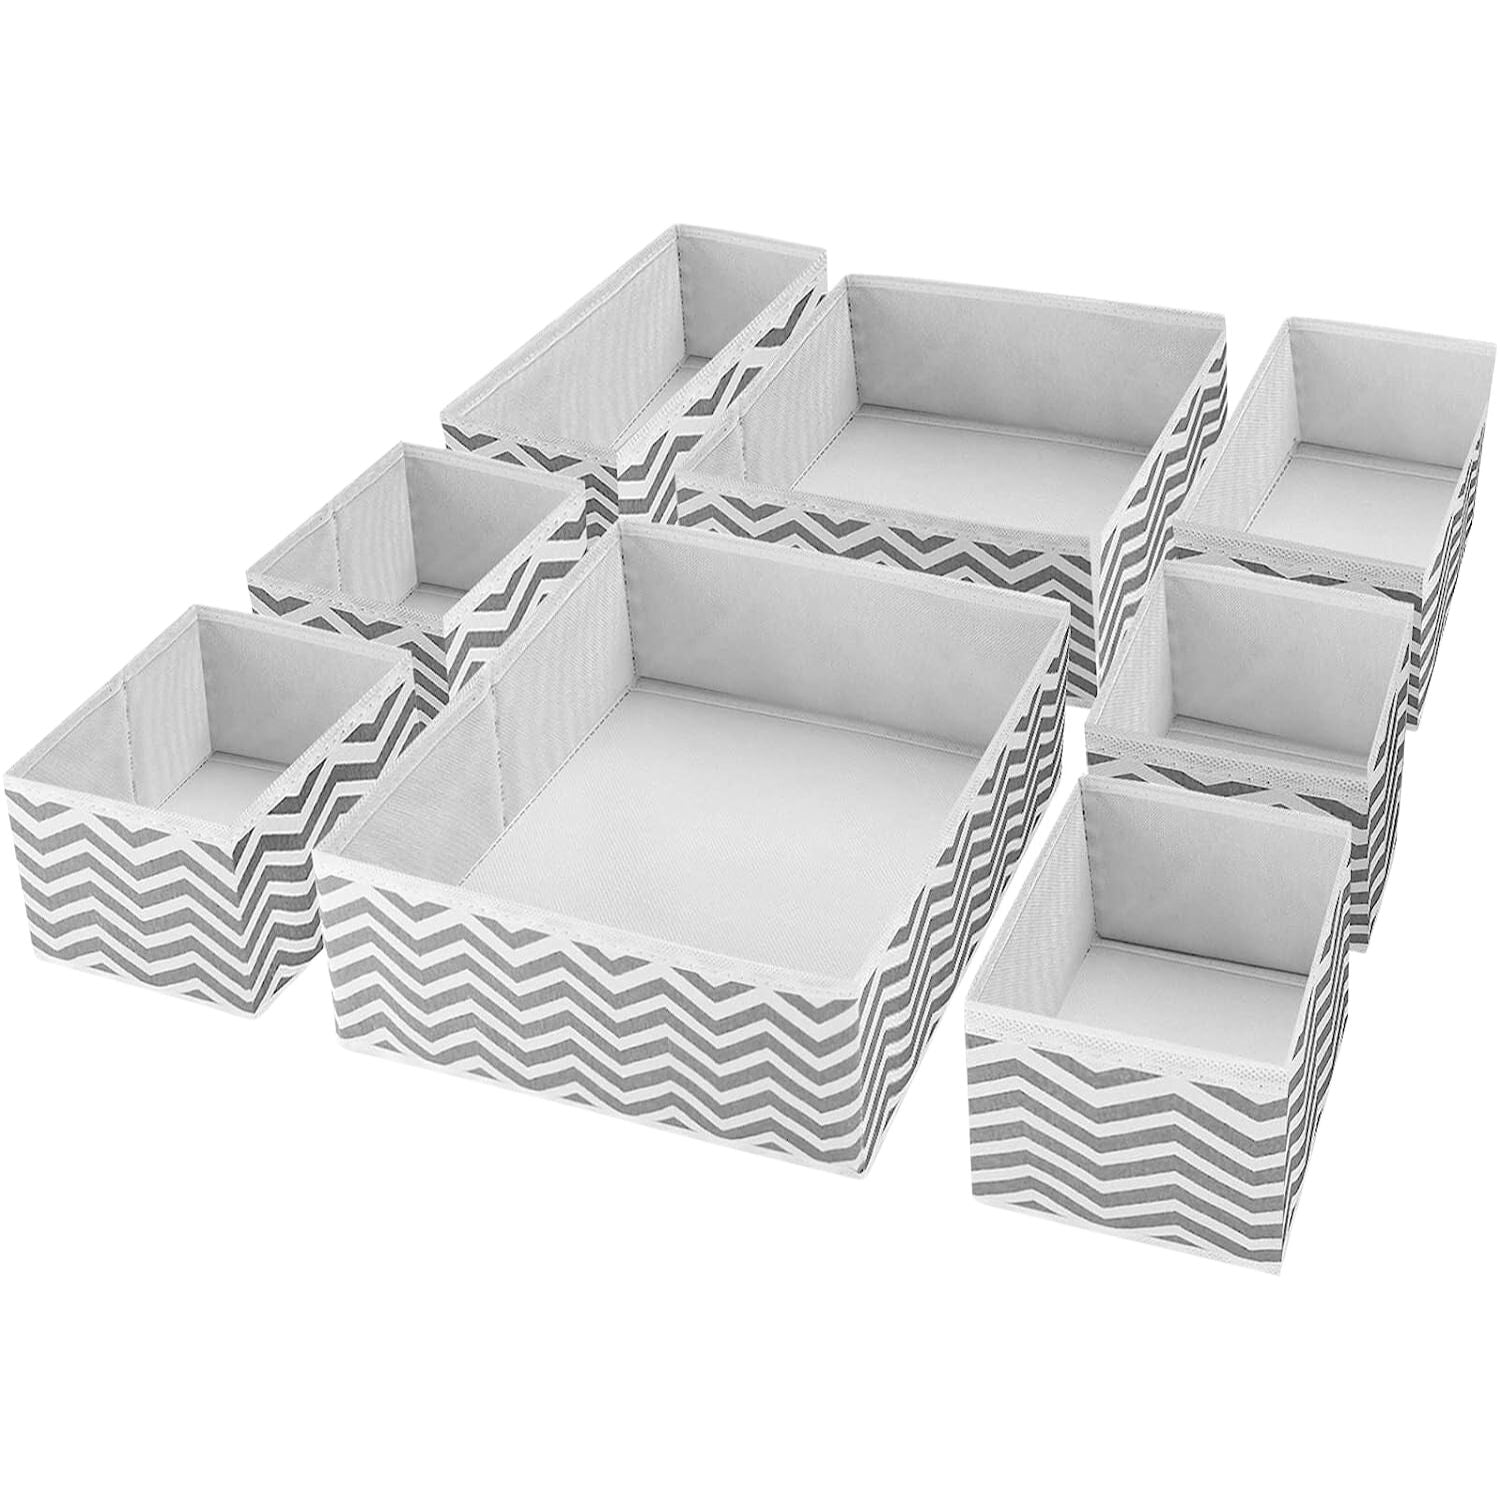 GOMINIMO 8 Set Foldable Clothes Storage Organizers in 3-Size (Stripe)